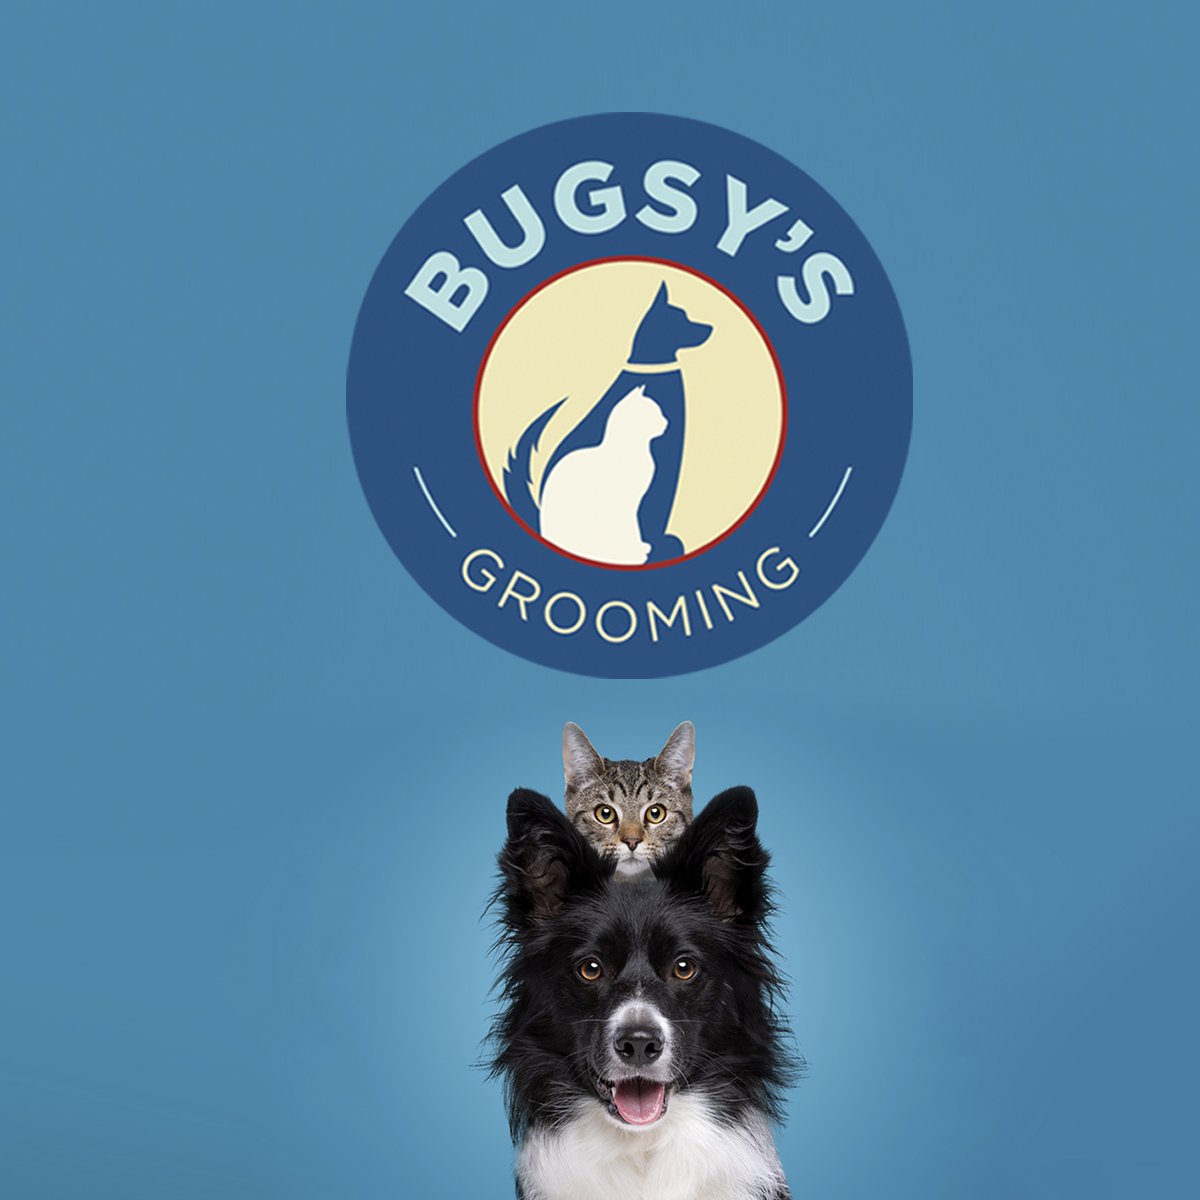 Bugsy's Grooming